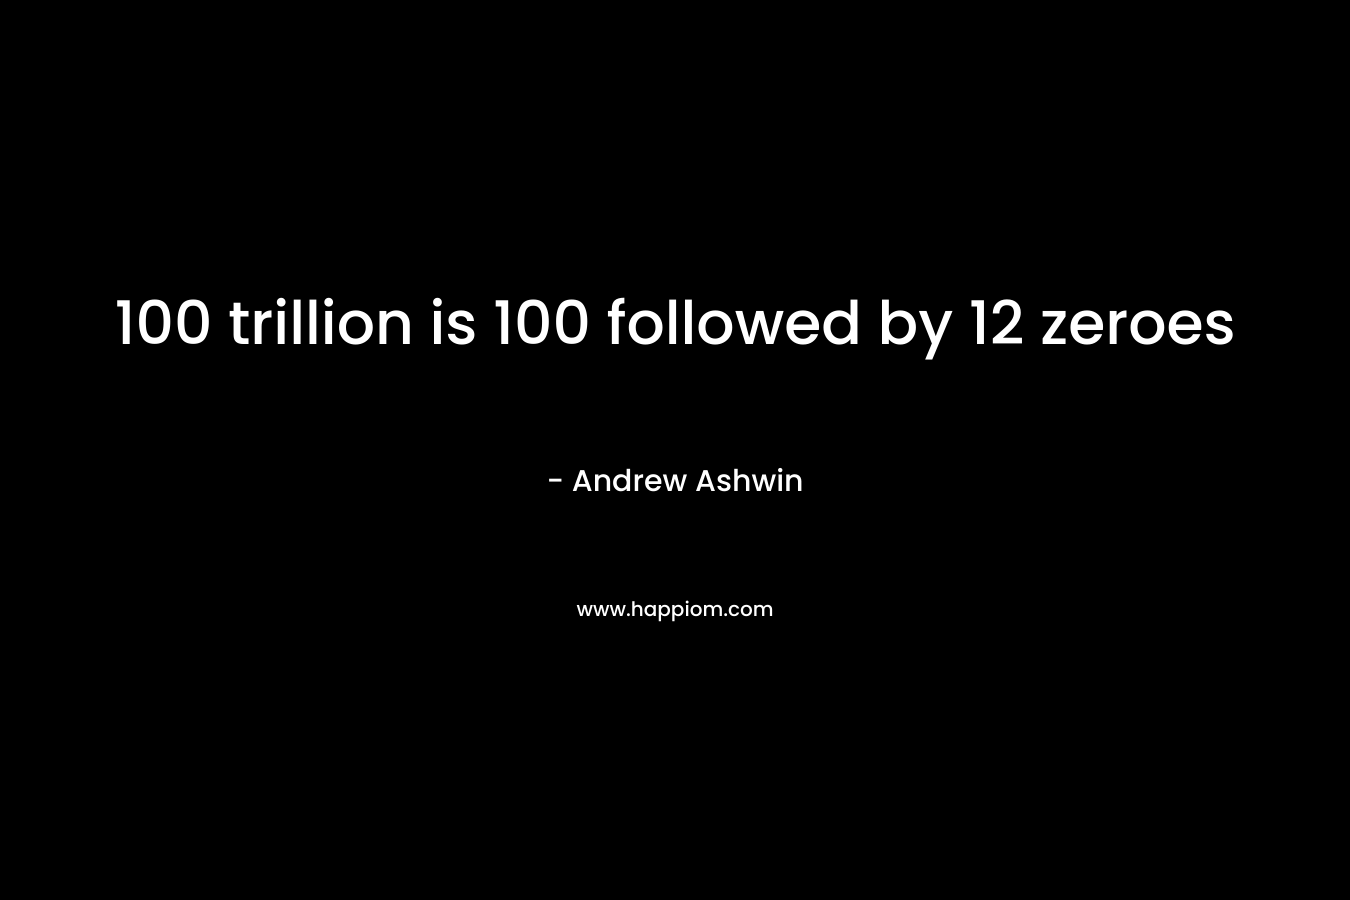 100 trillion is 100 followed by 12 zeroes